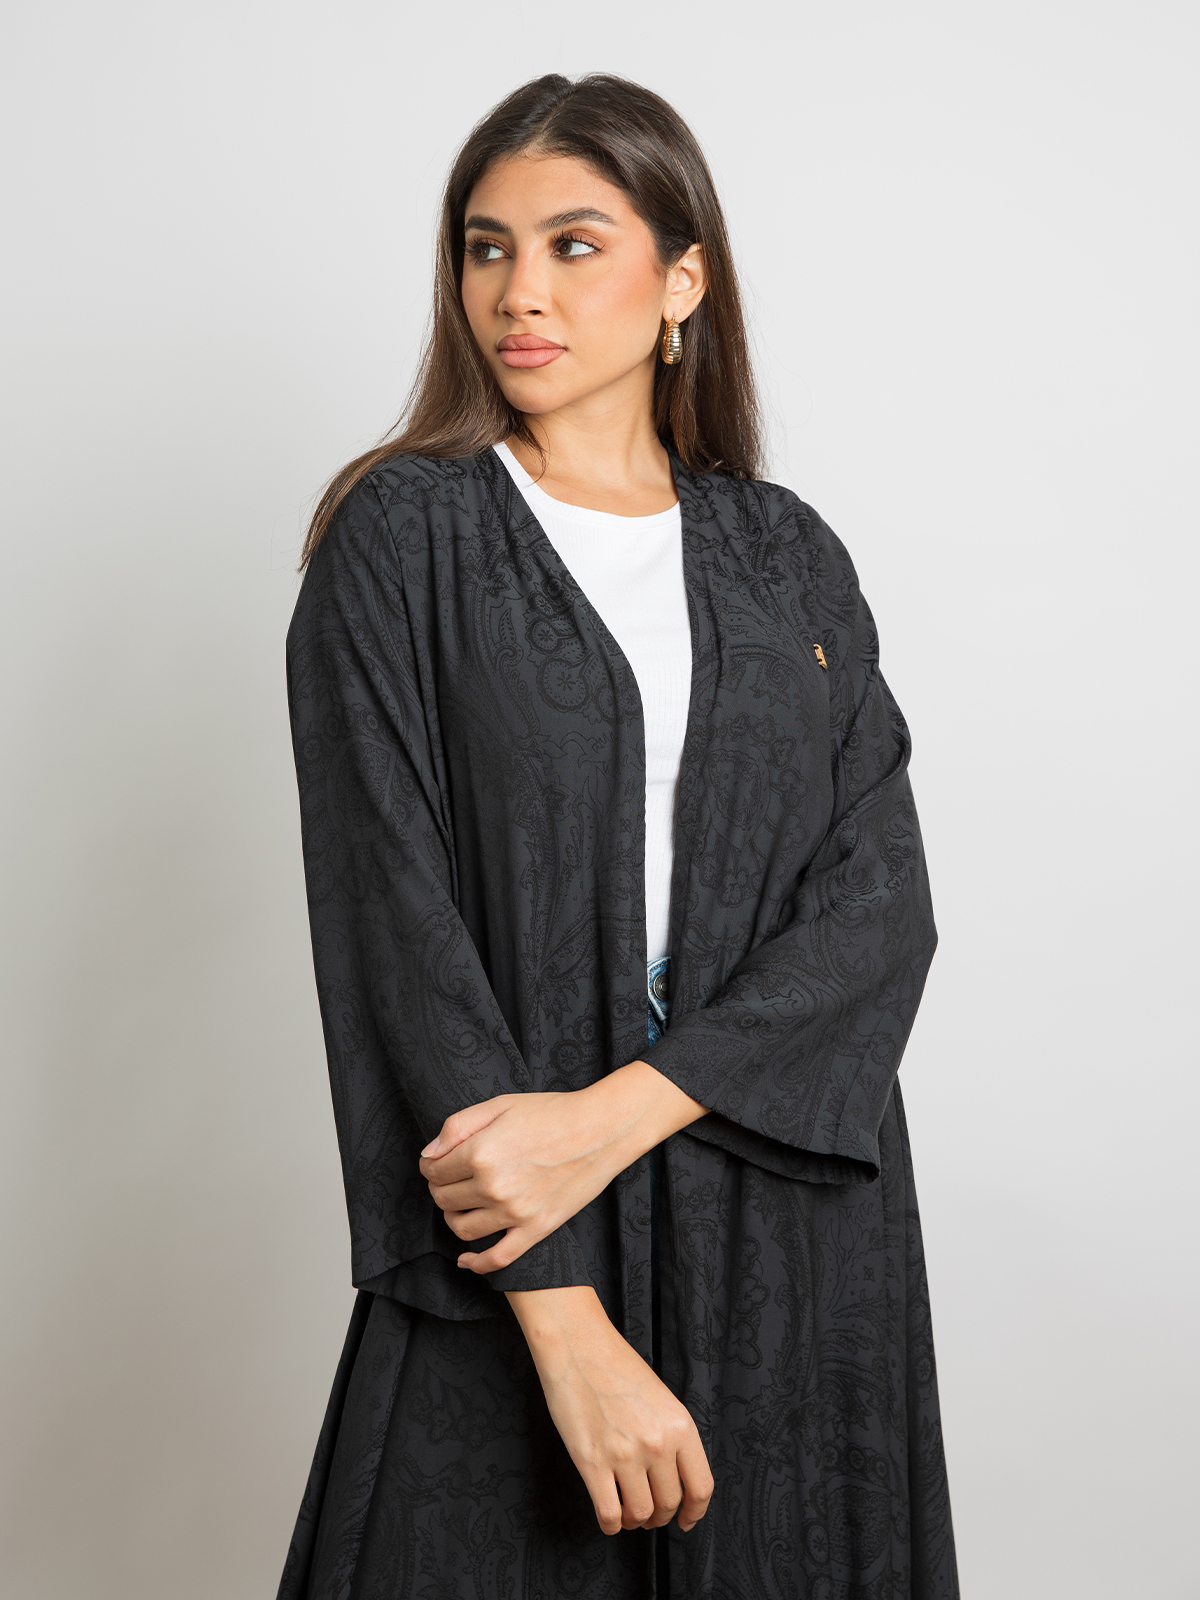 Black - A Cut Long Open Half Cloche Abaya in Silky Ornamented Fabric